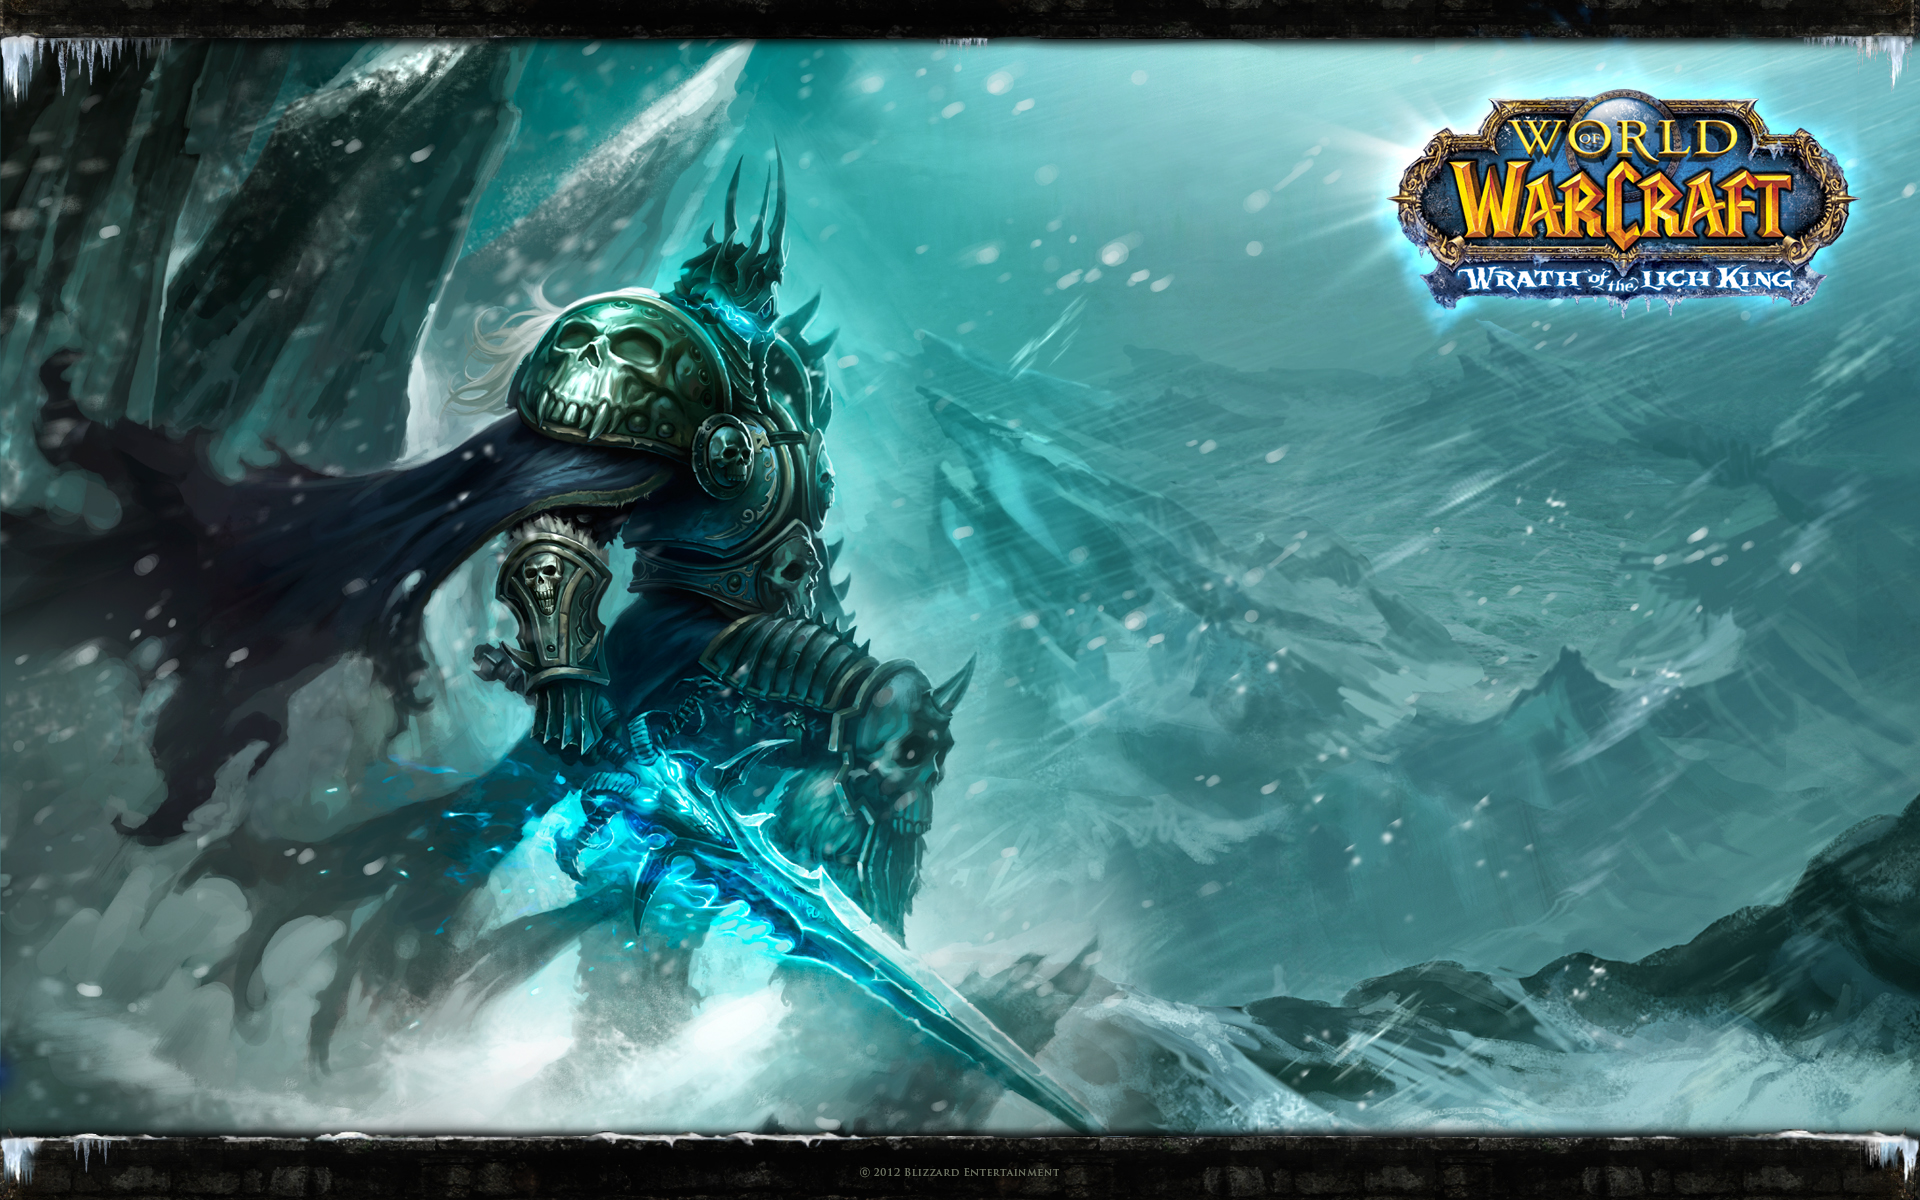 Tapeta ke hře World of Warcraft (WoW)